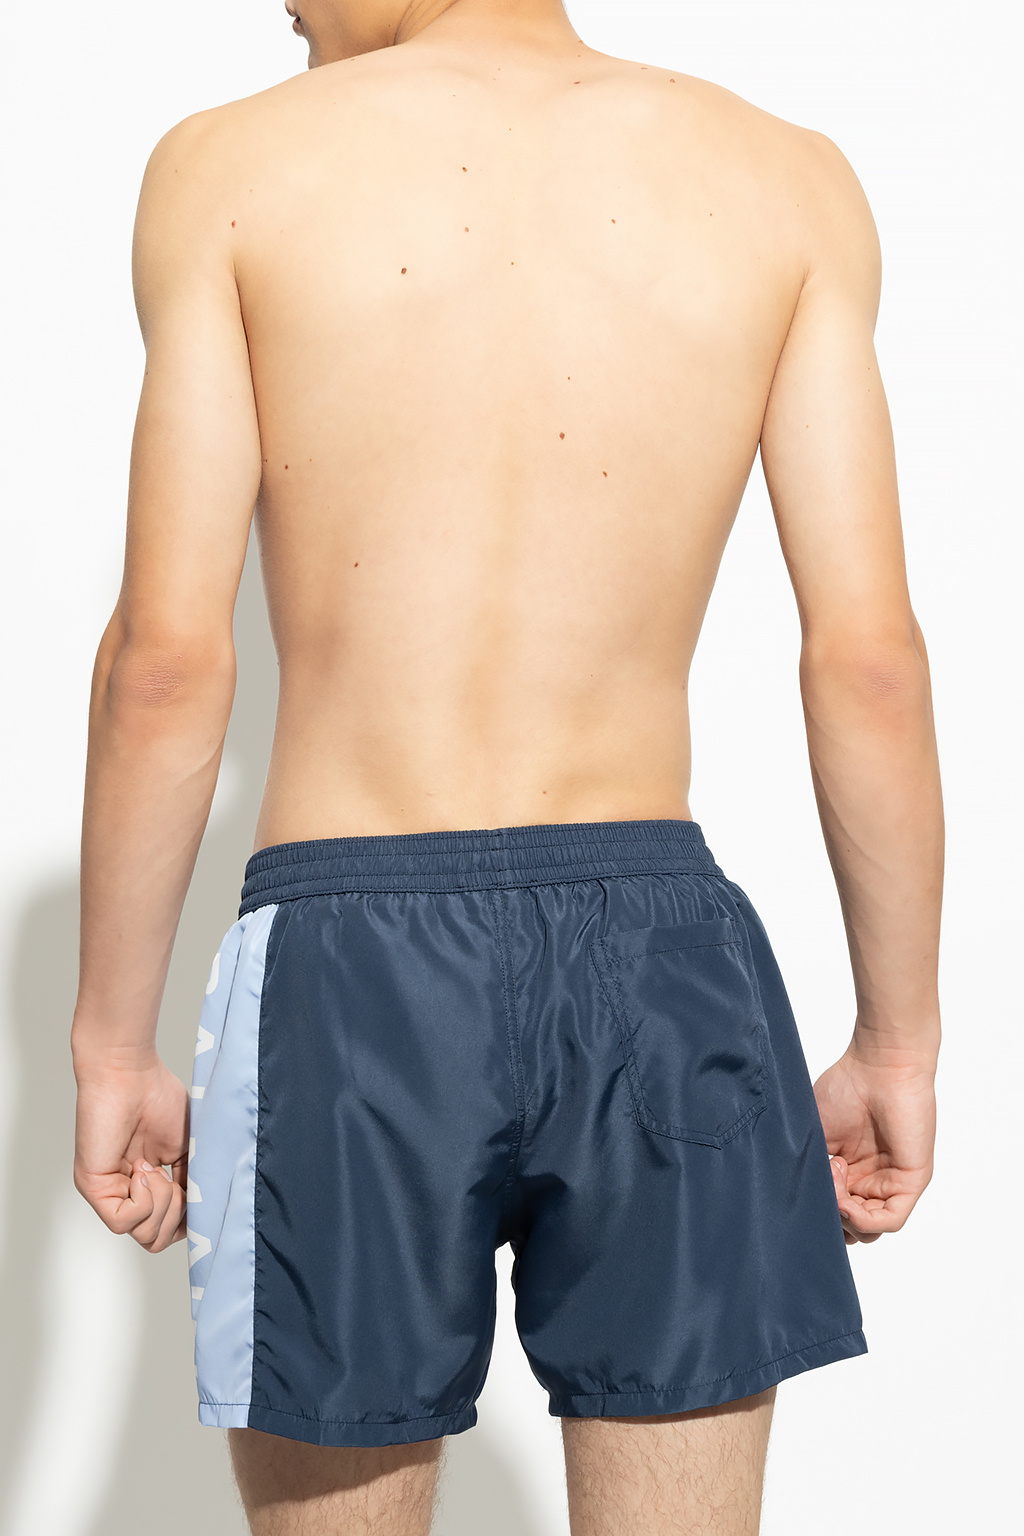 Balmain Swimming shorts